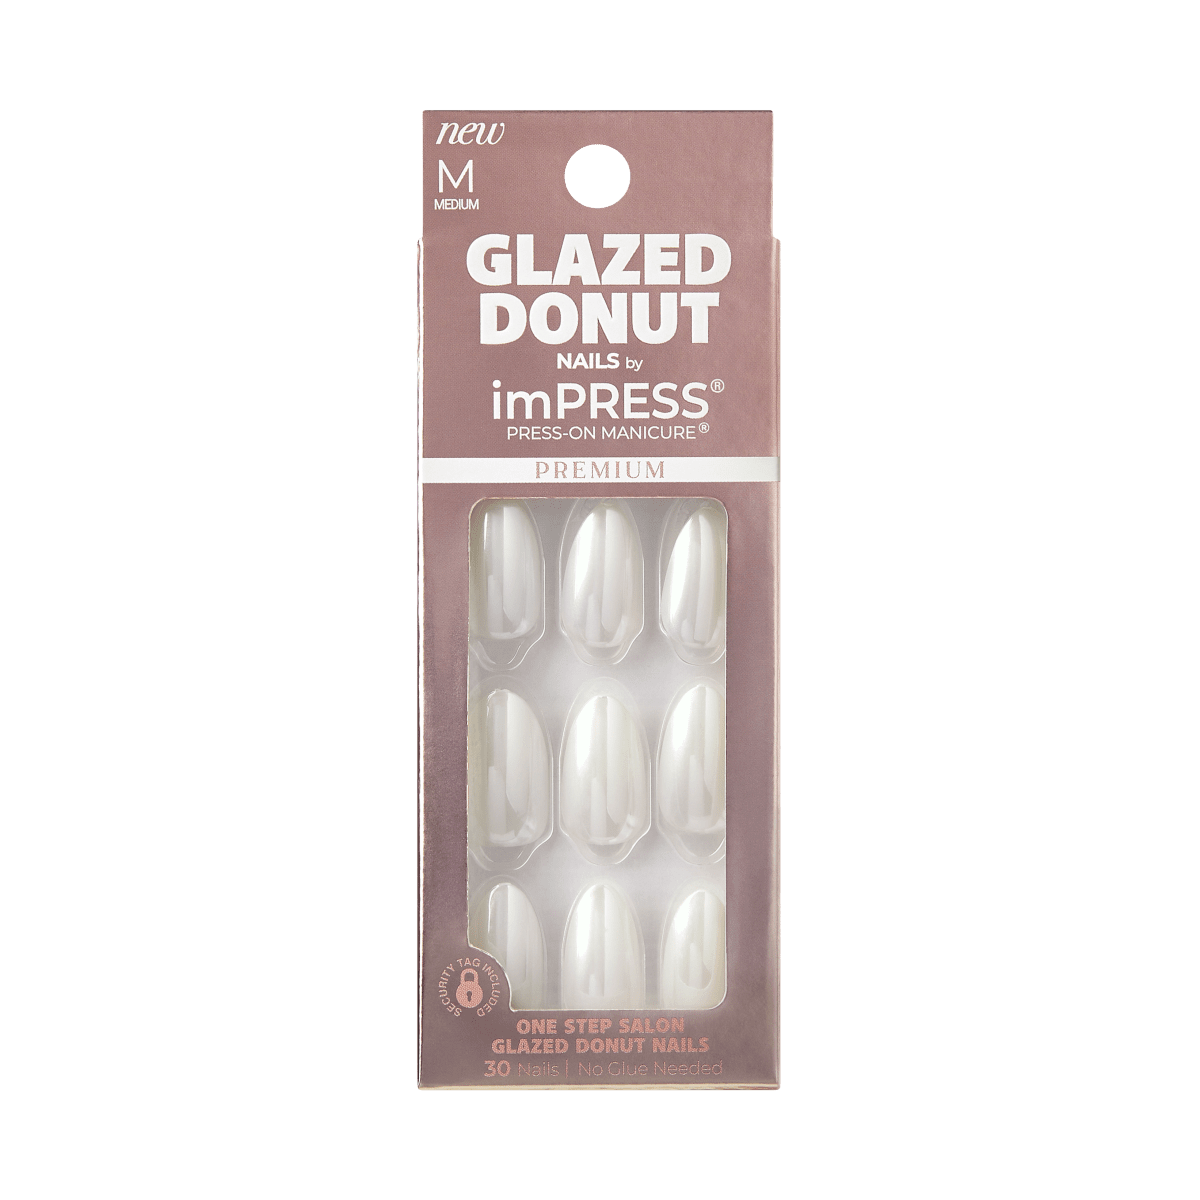 imPRESS Glazed Donut Press-On Manicure - Vanilla Glazed